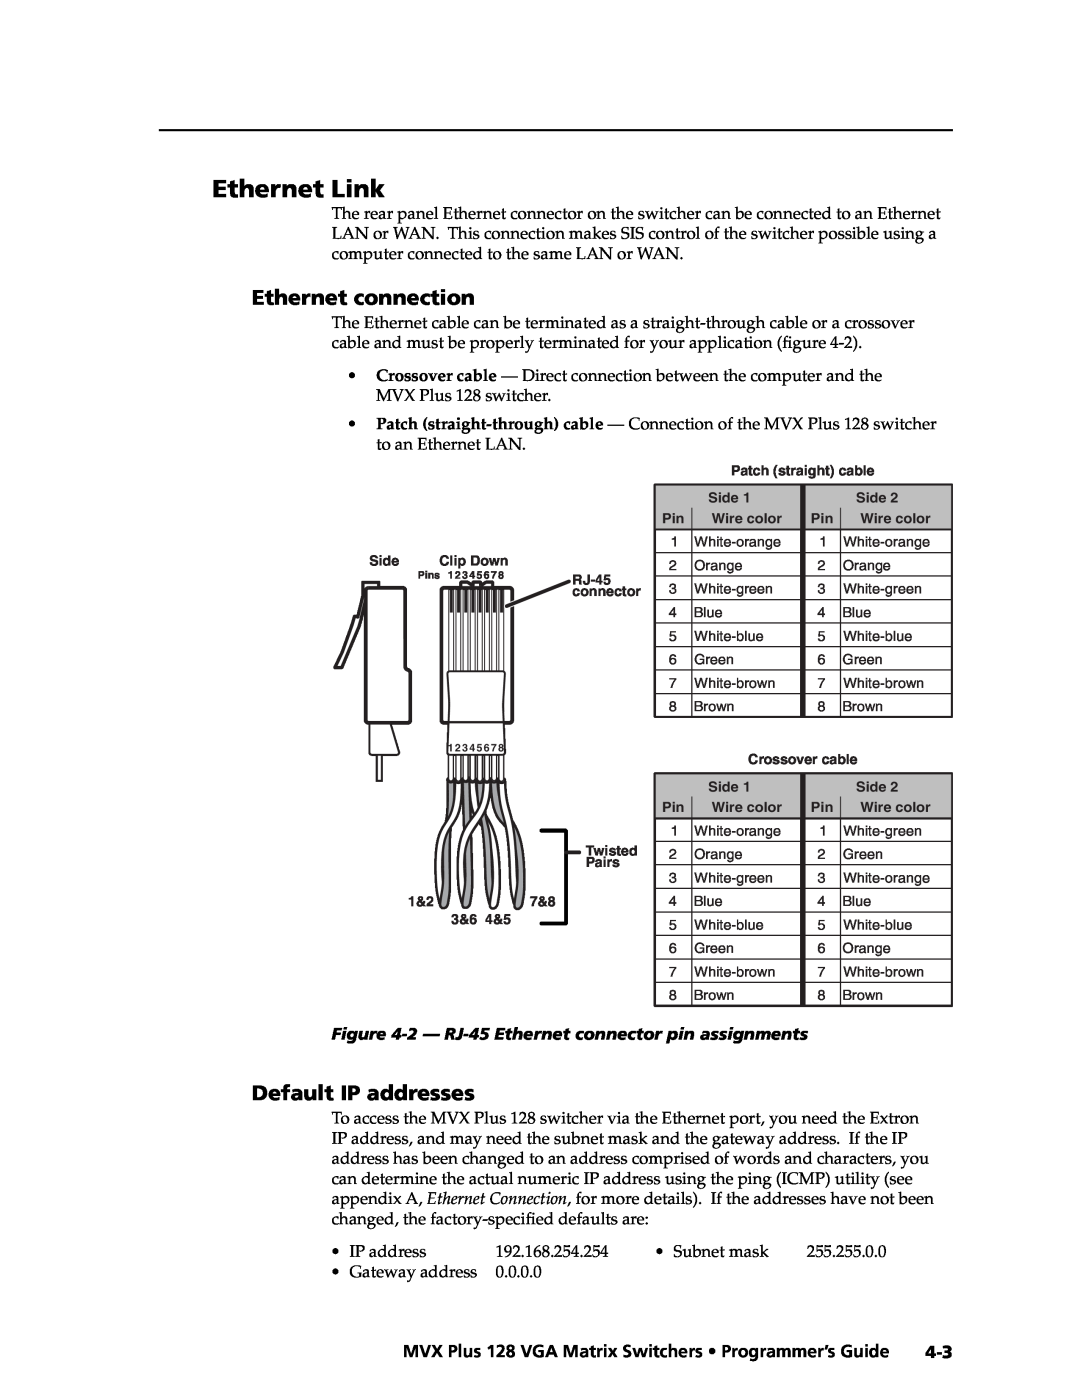 Extron electronic MVX PLUS 128 manual Ethernet Link, Default IP addresses, Ethernet connection 